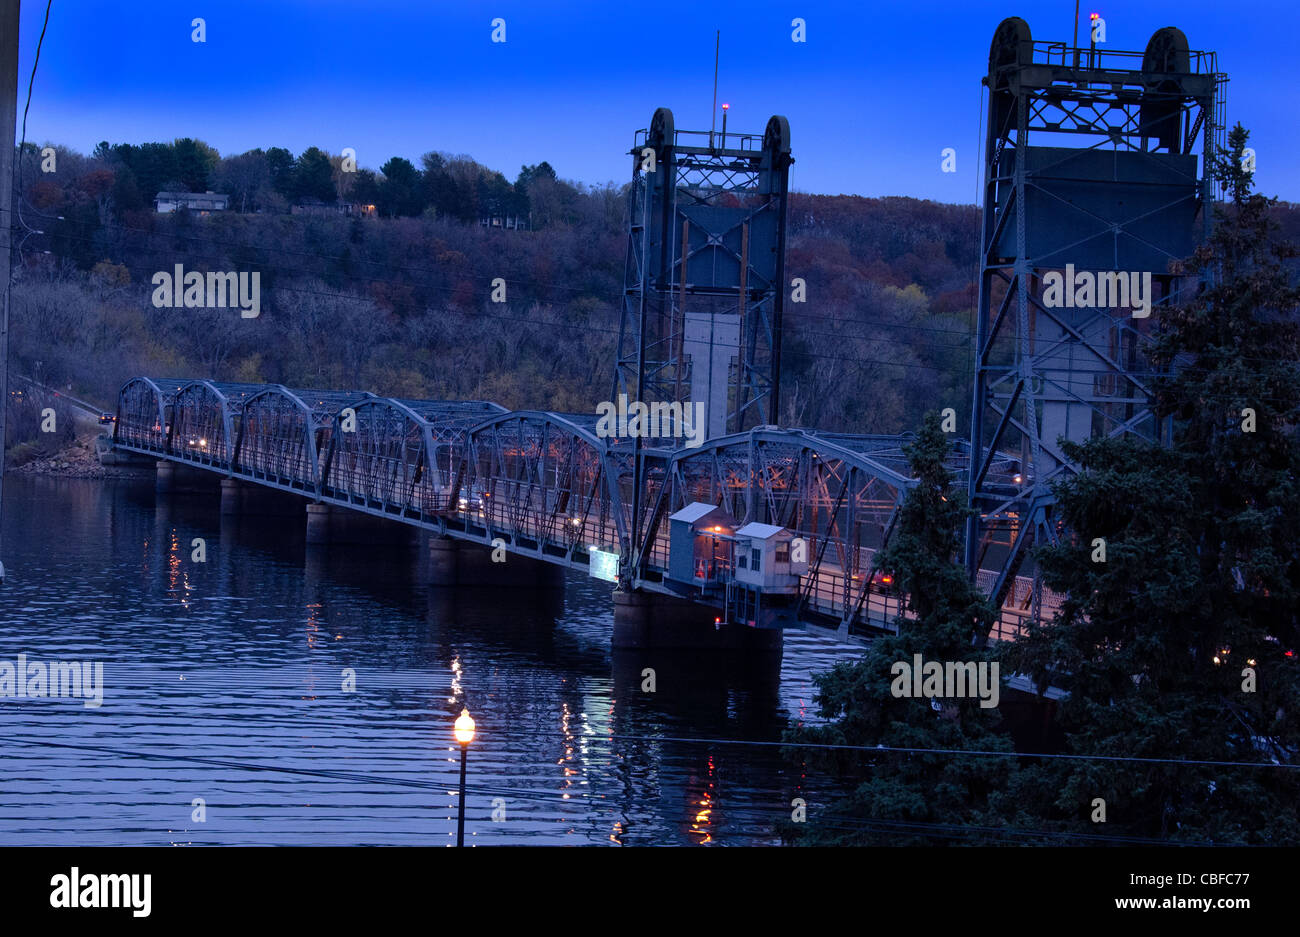 Stillwater Lift Bridge over the St. Croix River in Stillwater, Minnesota Stock Photo